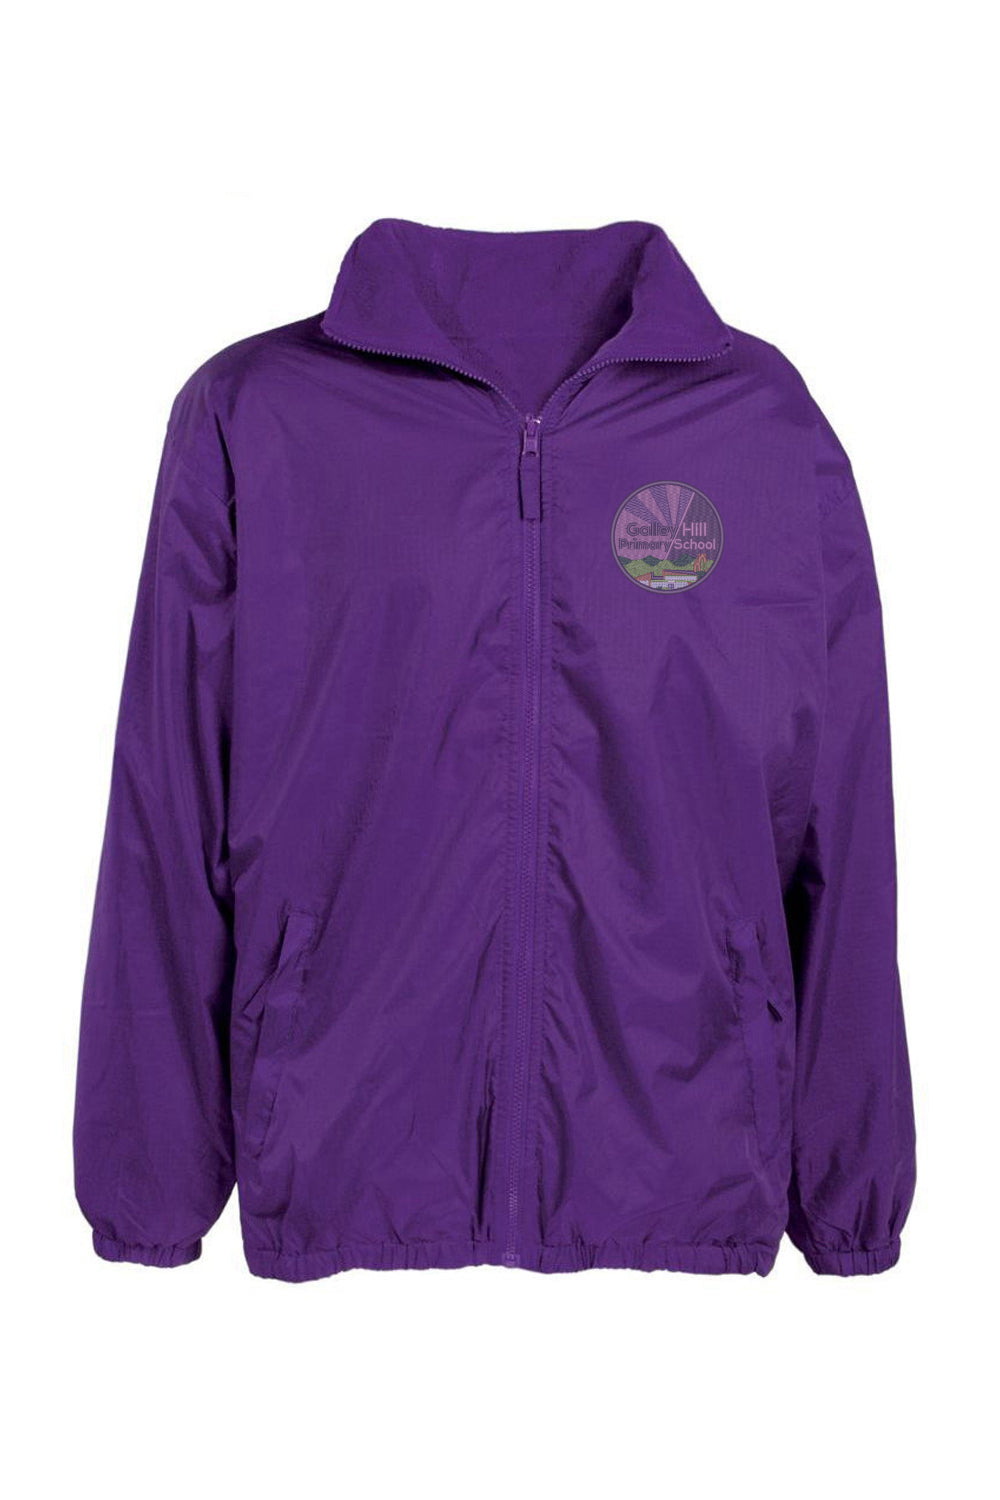 Galley Hill Purple Shower Jacket